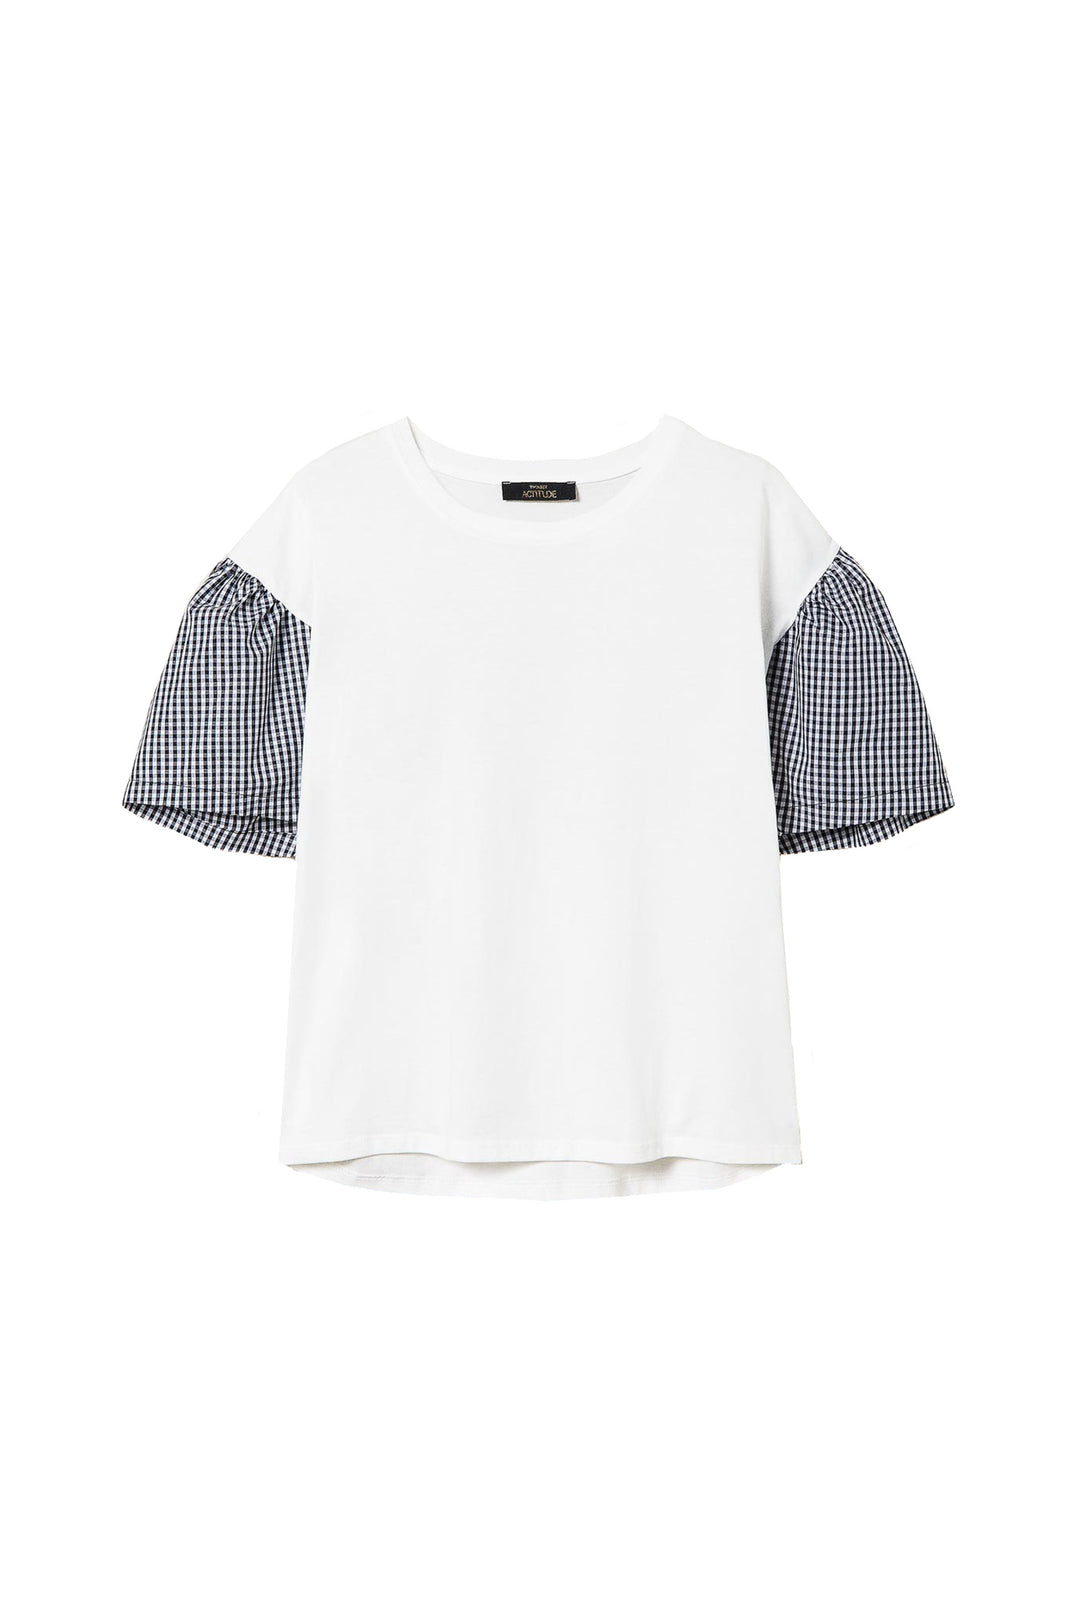 ACTITUDE TWINSET T-shirt regular bianca con maniche Vichy bicolor - Mancinelli 1954